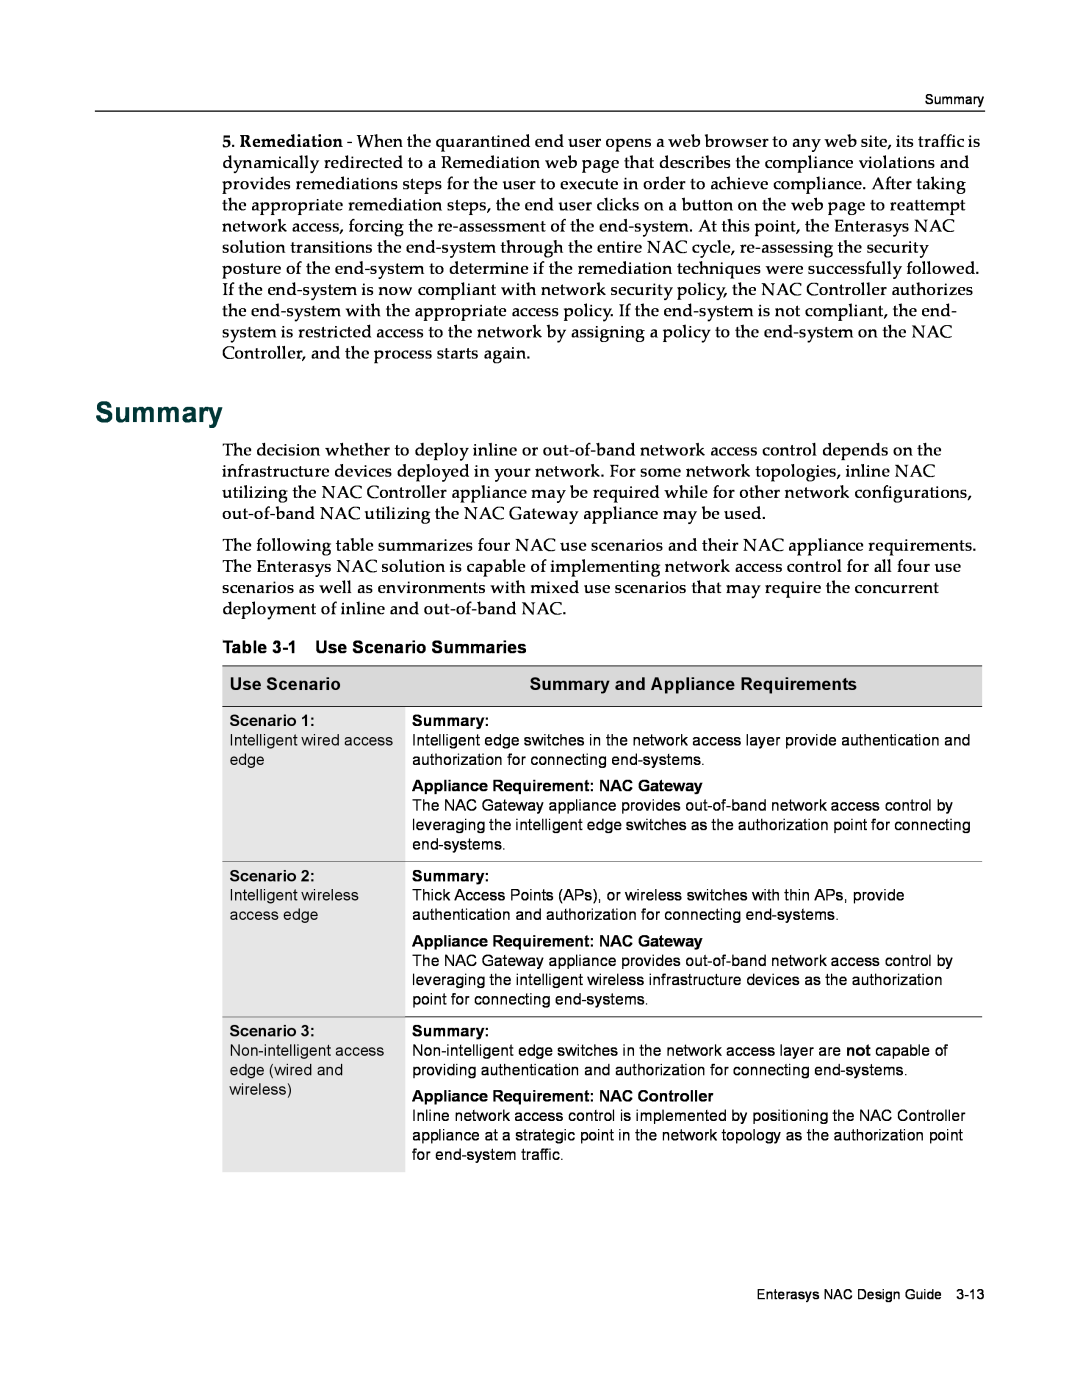 Enterasys Networks 9034385 manual 1 Use Scenario Summaries, Summary and Appliance Requirements 